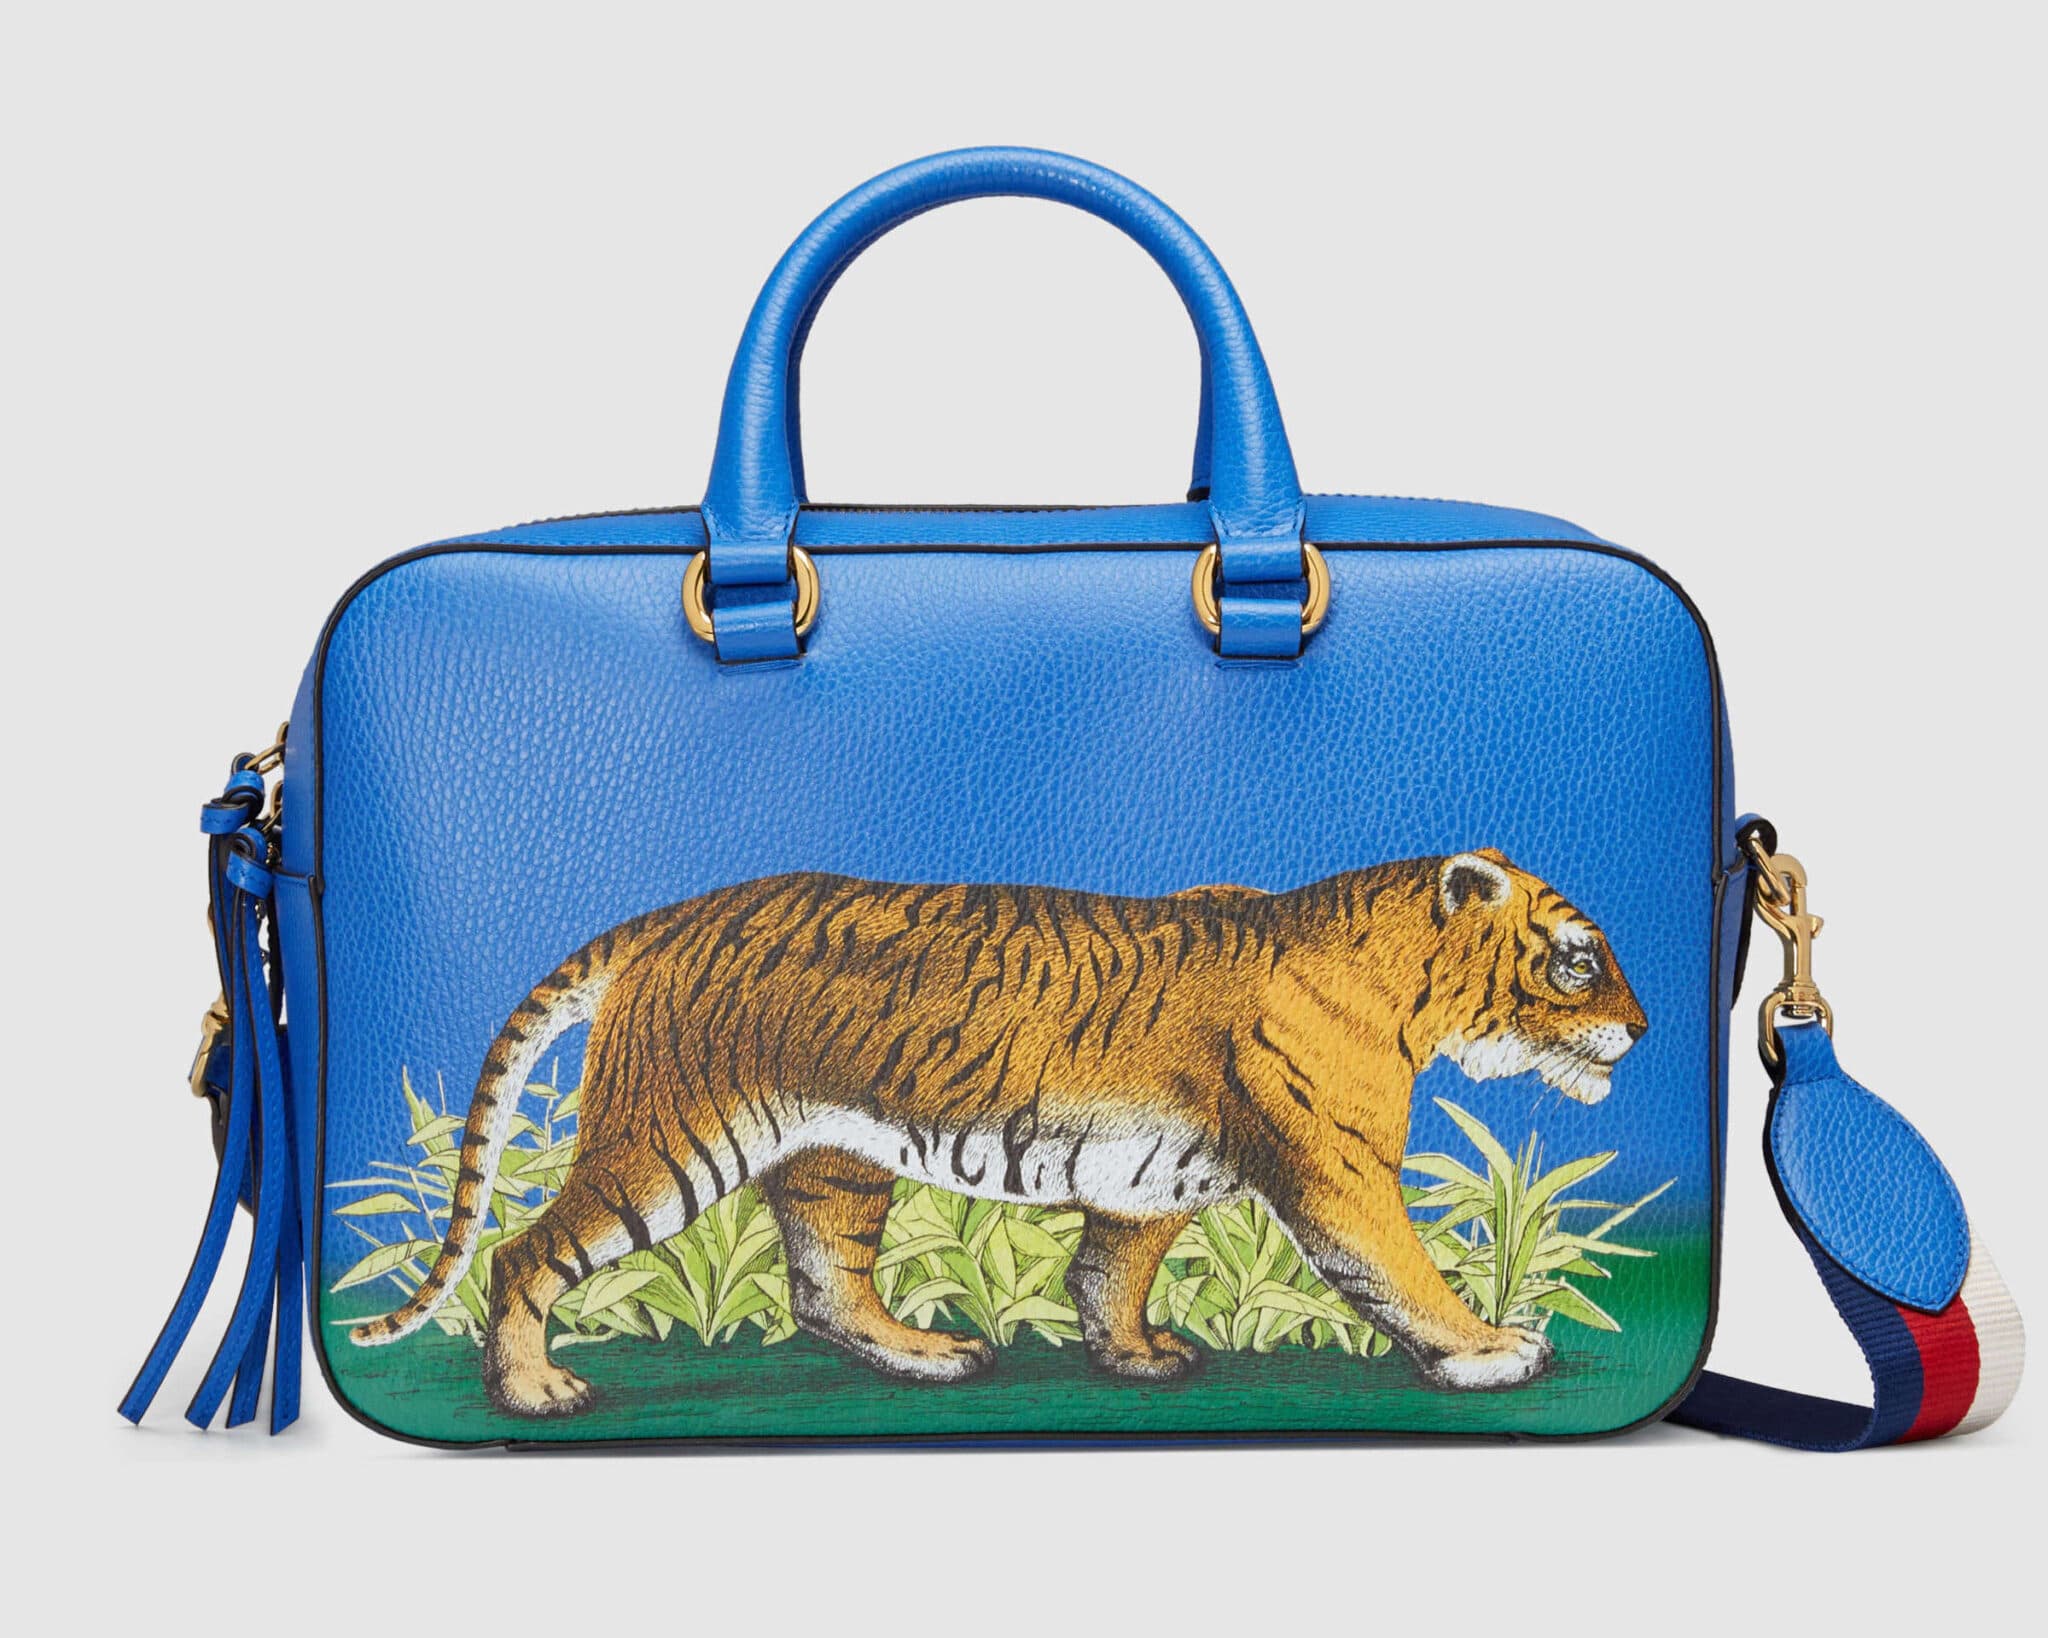 Gucci Tiger Print Leather Top Handle Bag